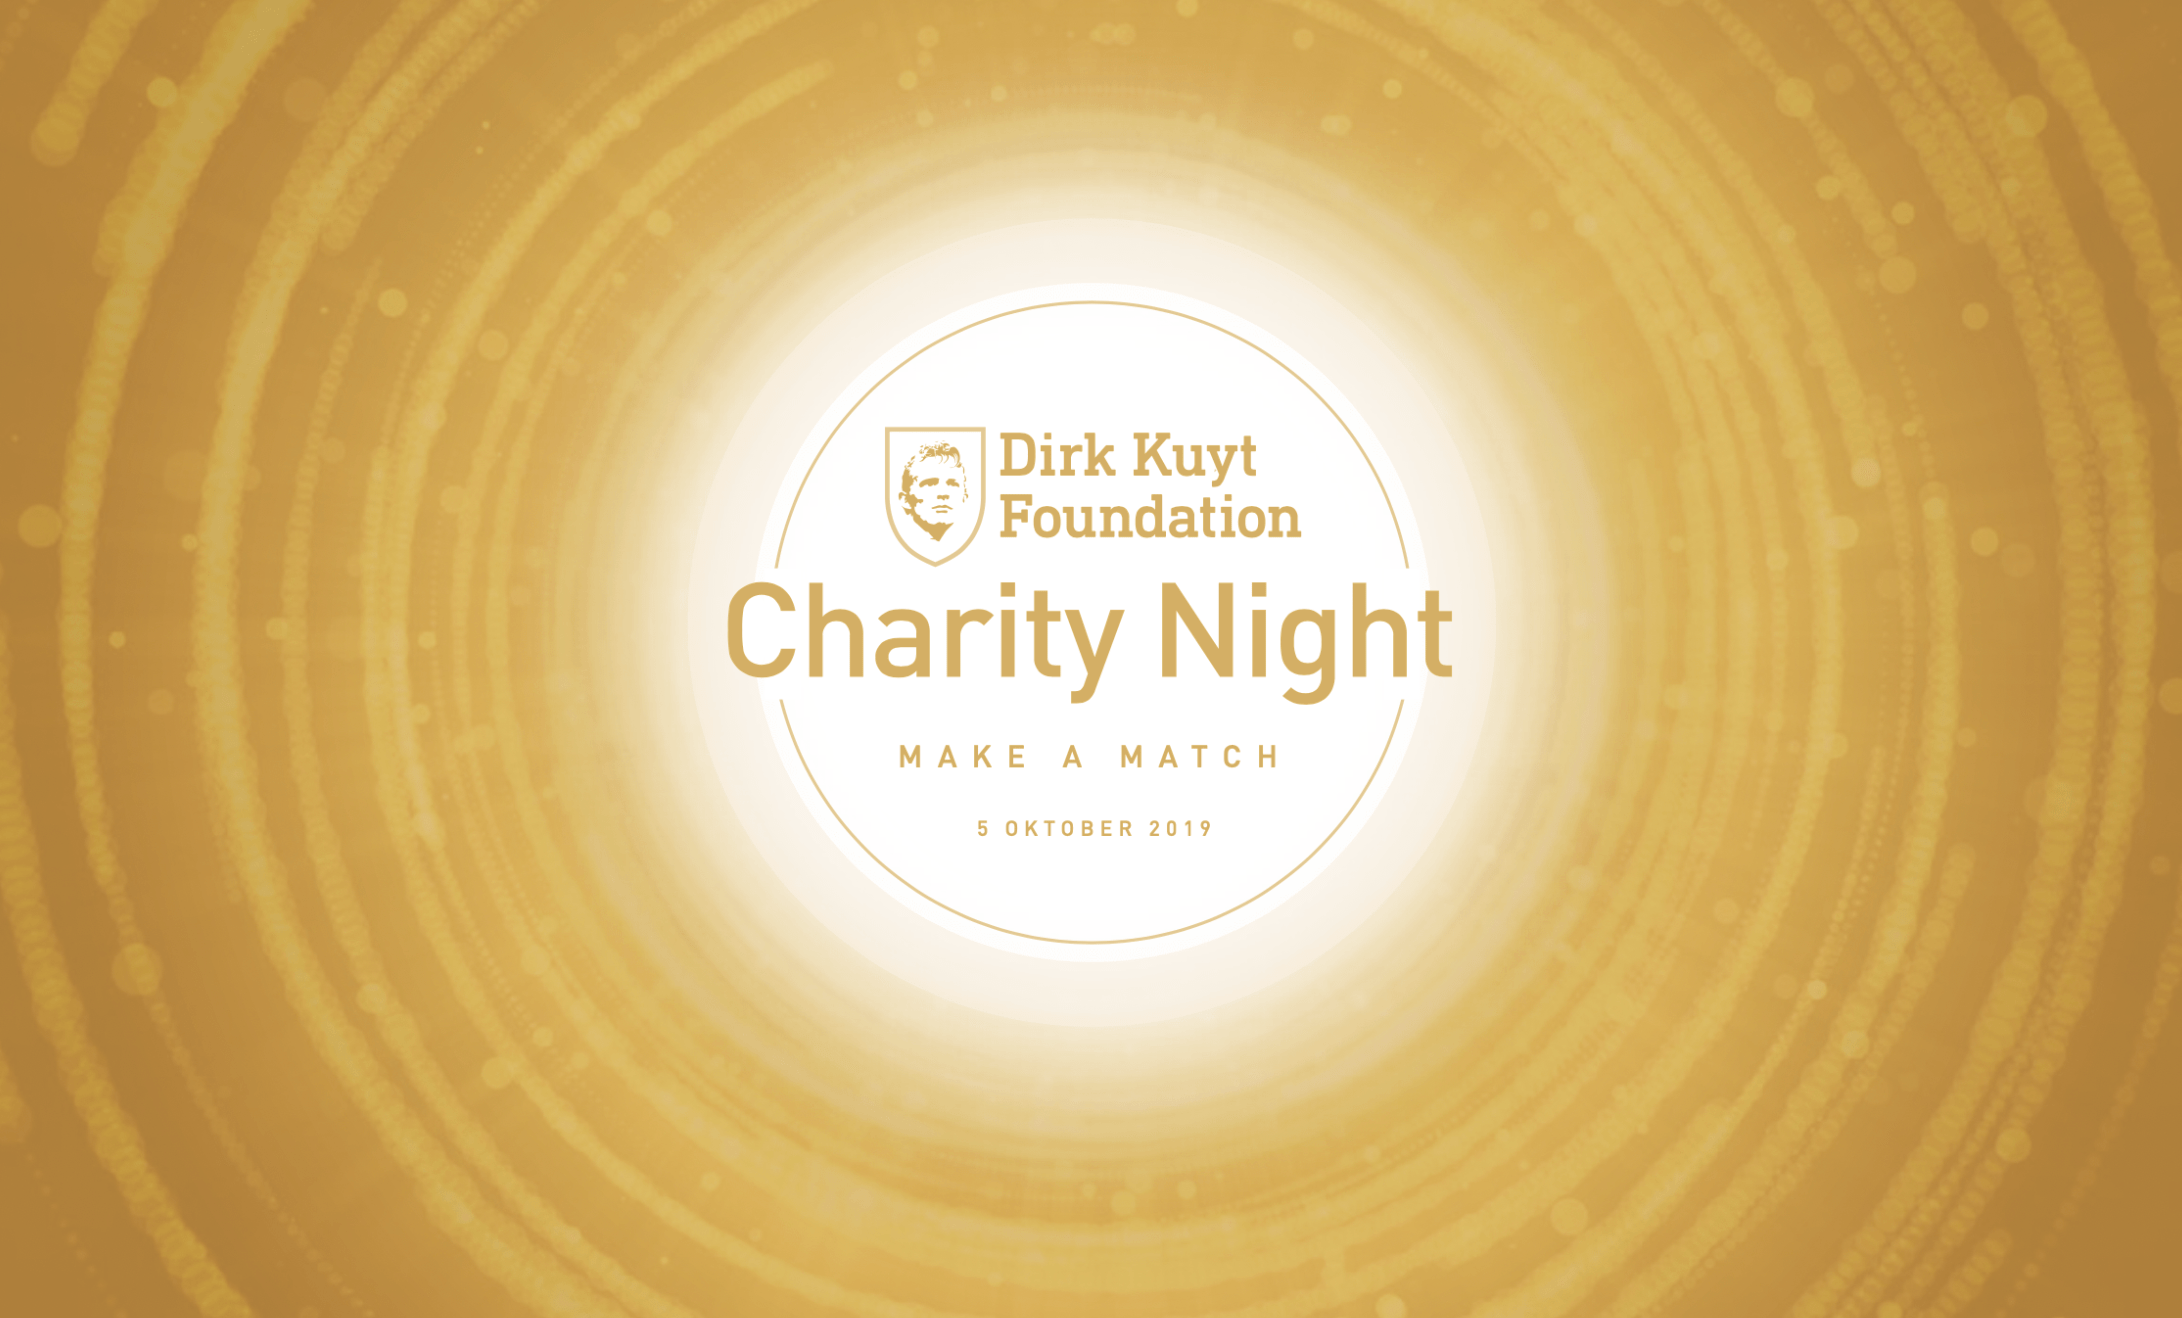 Logo van Dirk Kuyt foundation